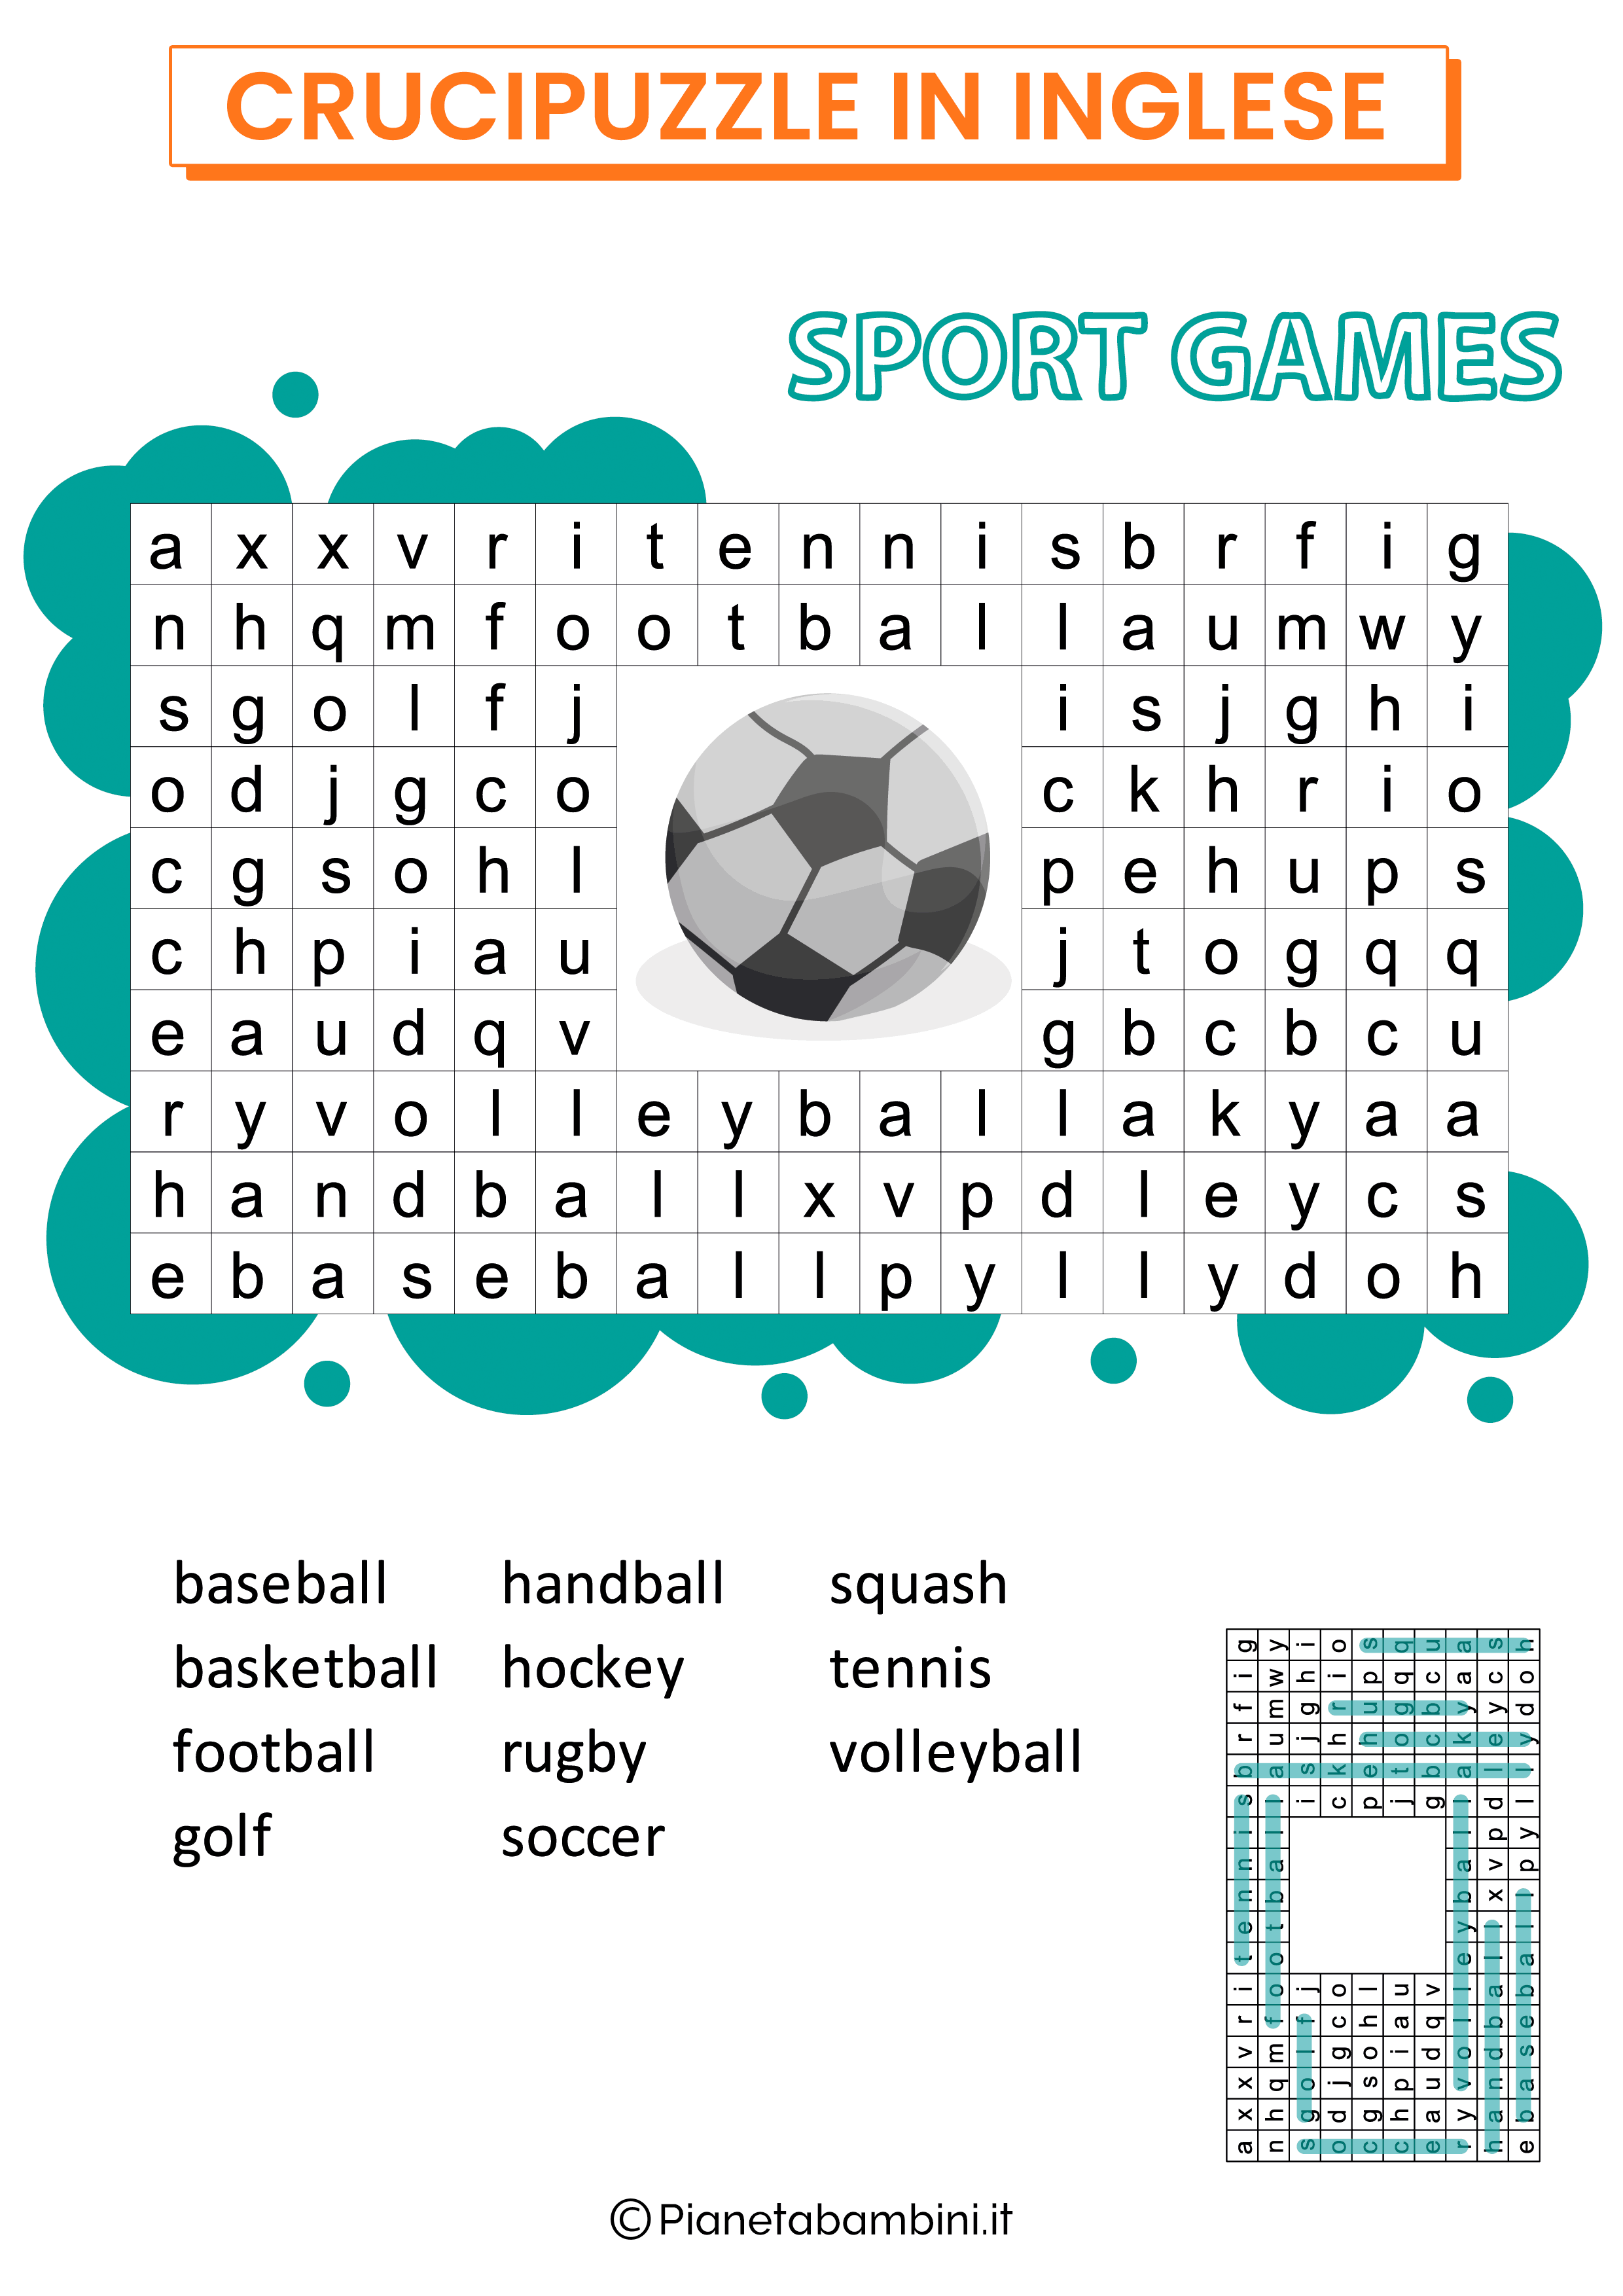 Crucipuzzle Inglese Sport Games da stampare